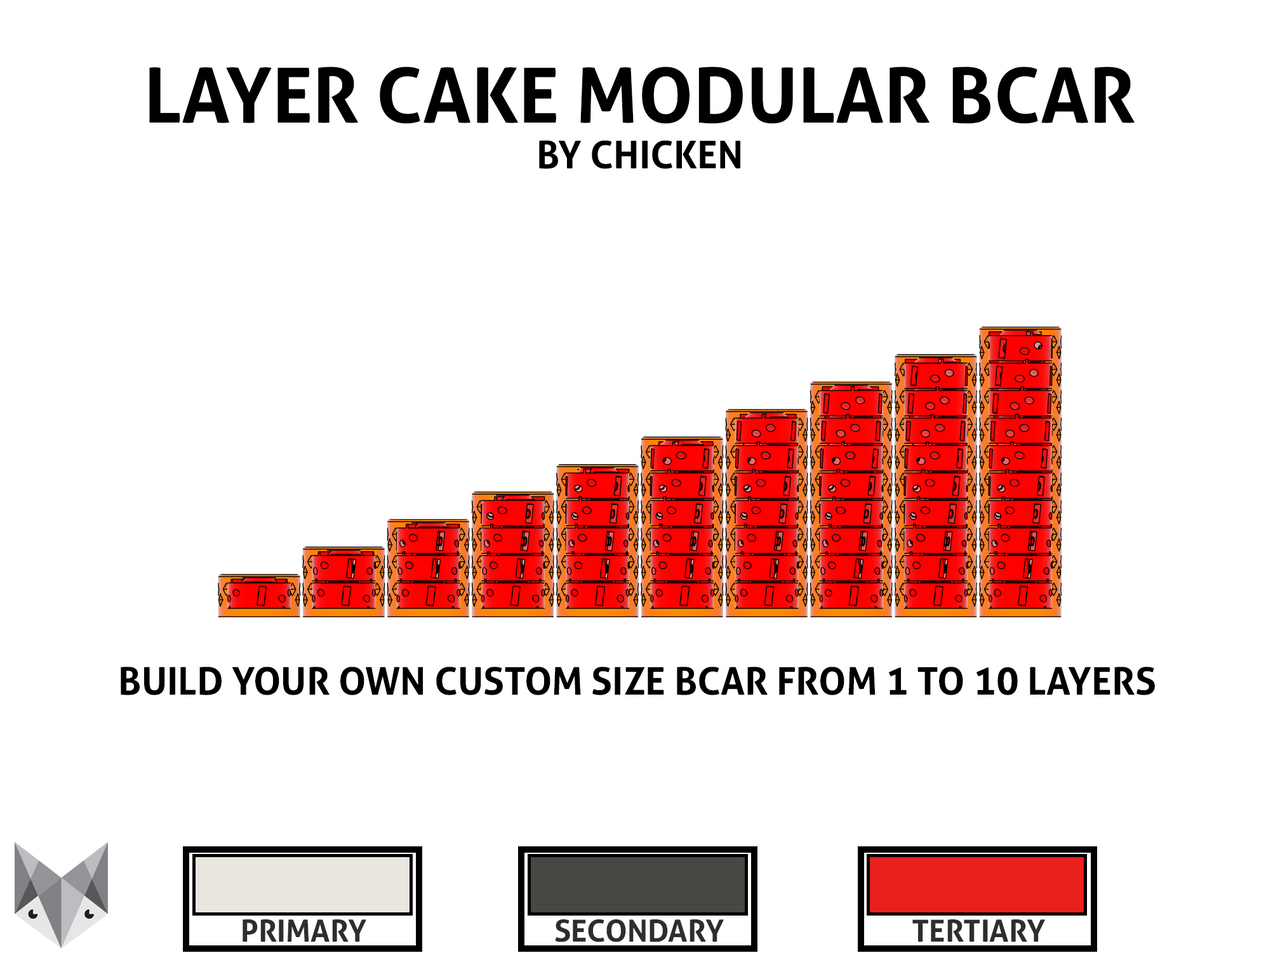 Layer Cake Modular BCAR System by Chicken